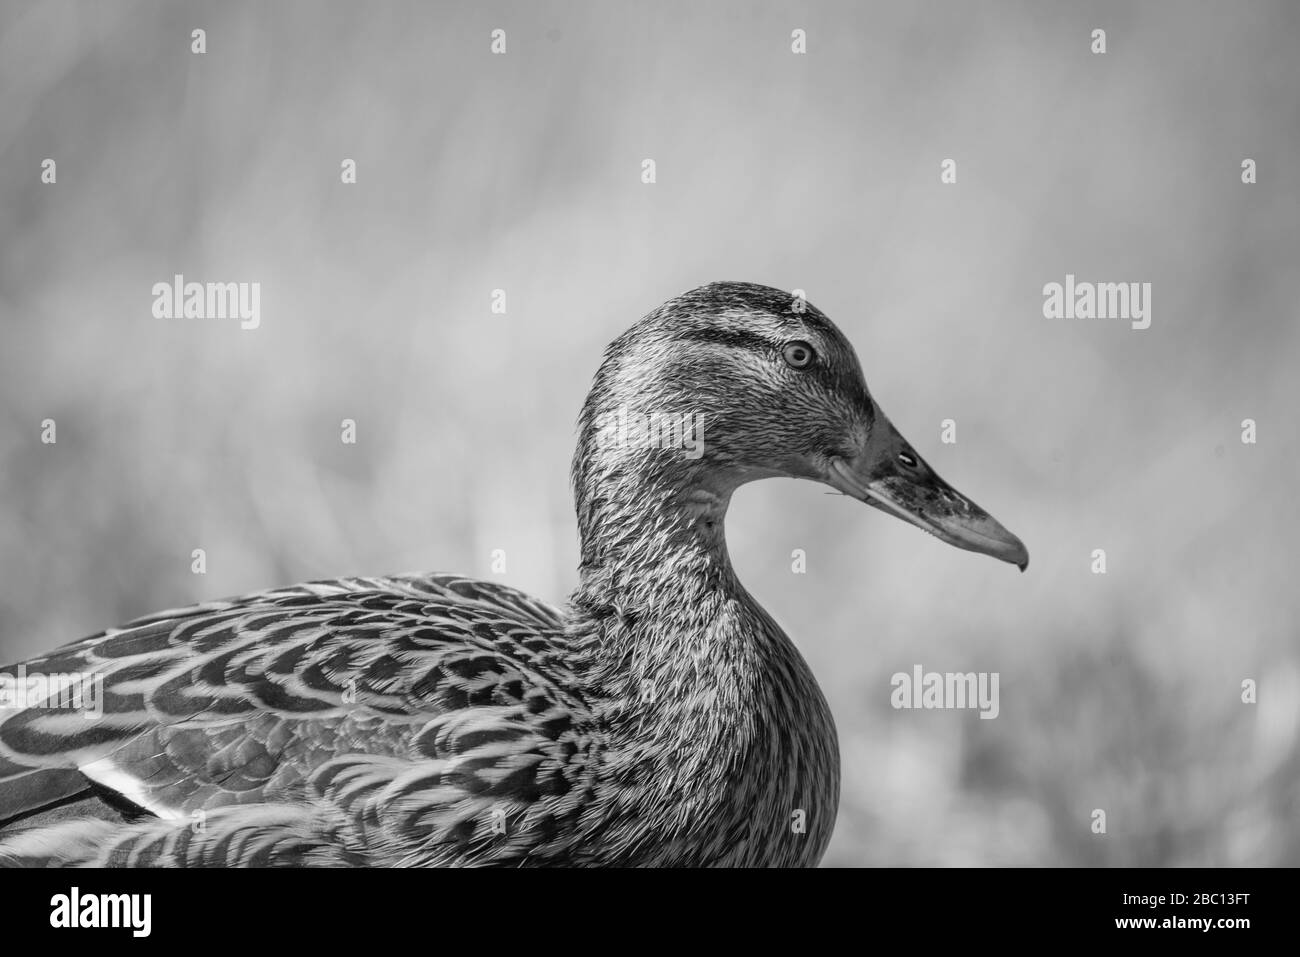 UK Wildlife - Duck in natural surroundings - Floodplain nature reserve Stock Photo